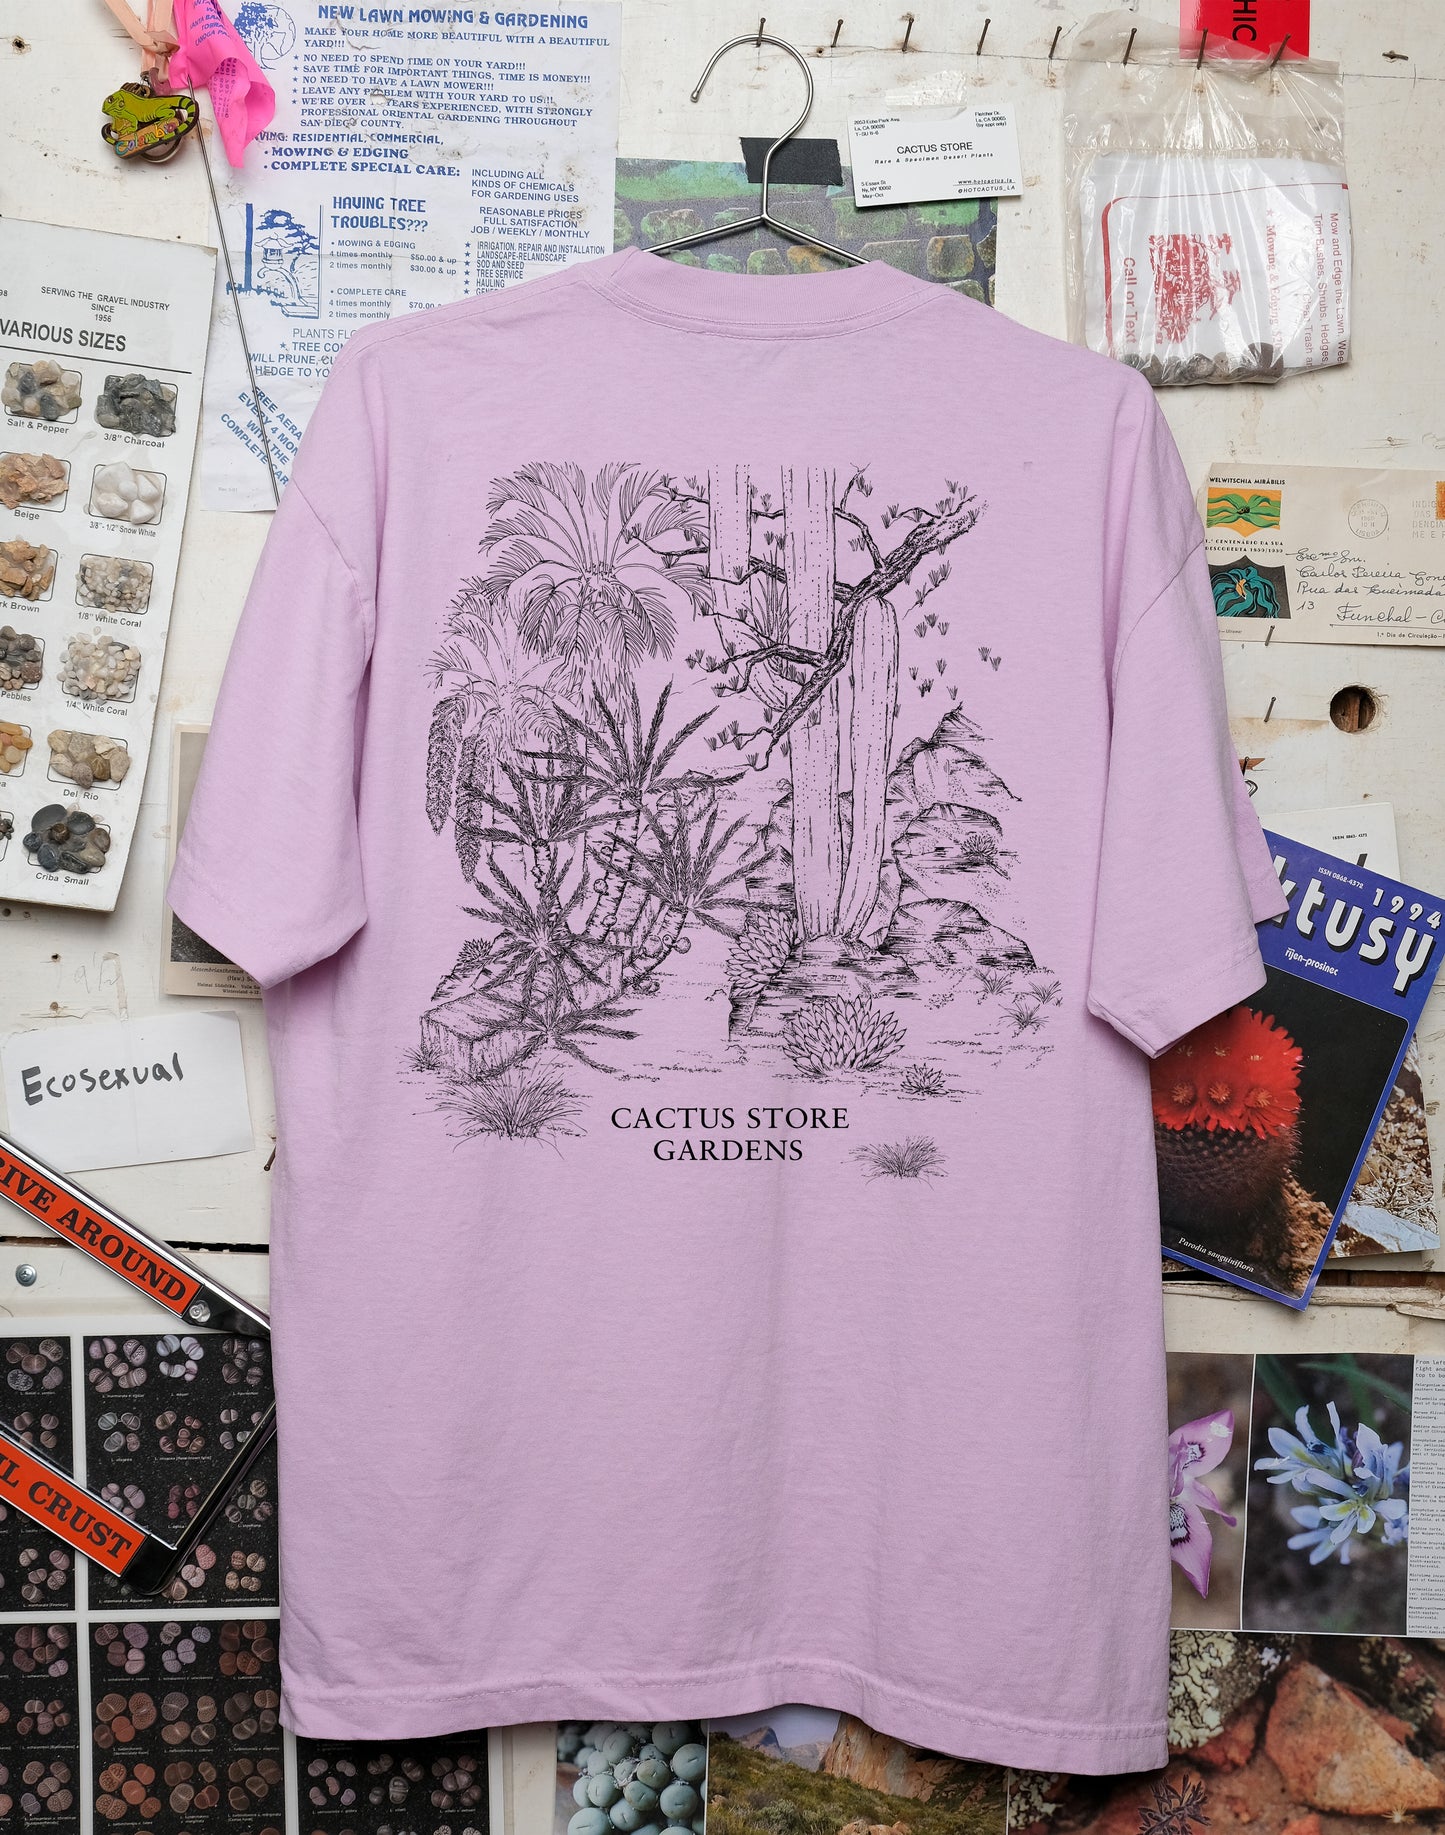 Cactus Store Gardens T-Shirt